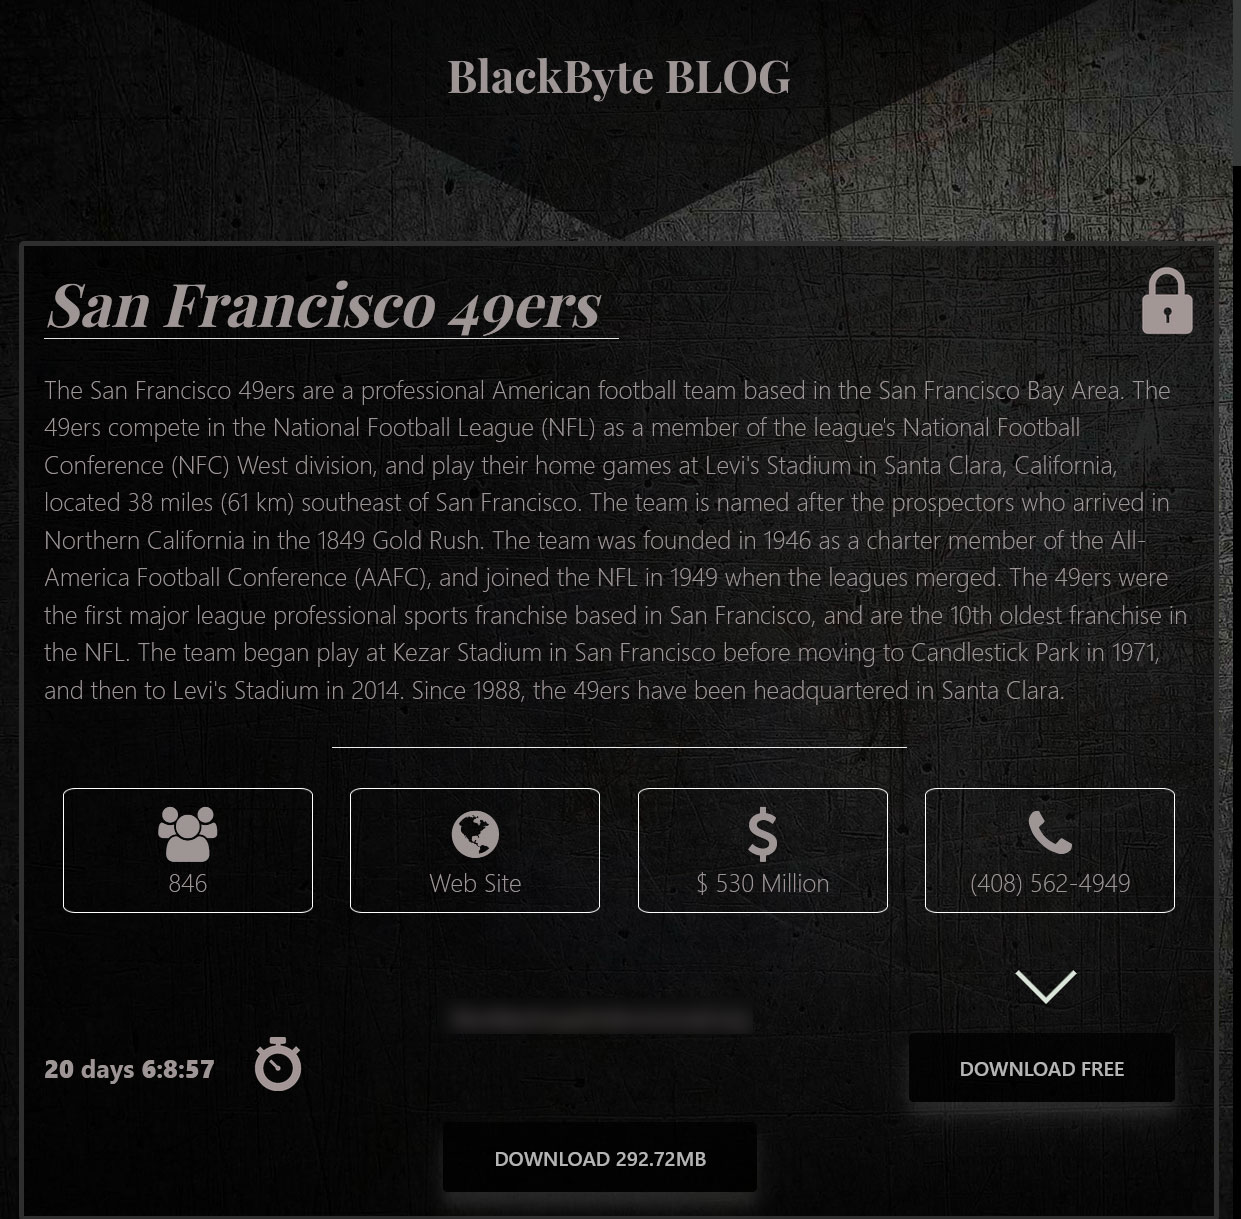  BlackByte ransomware leaking the San Francisco 49ers data